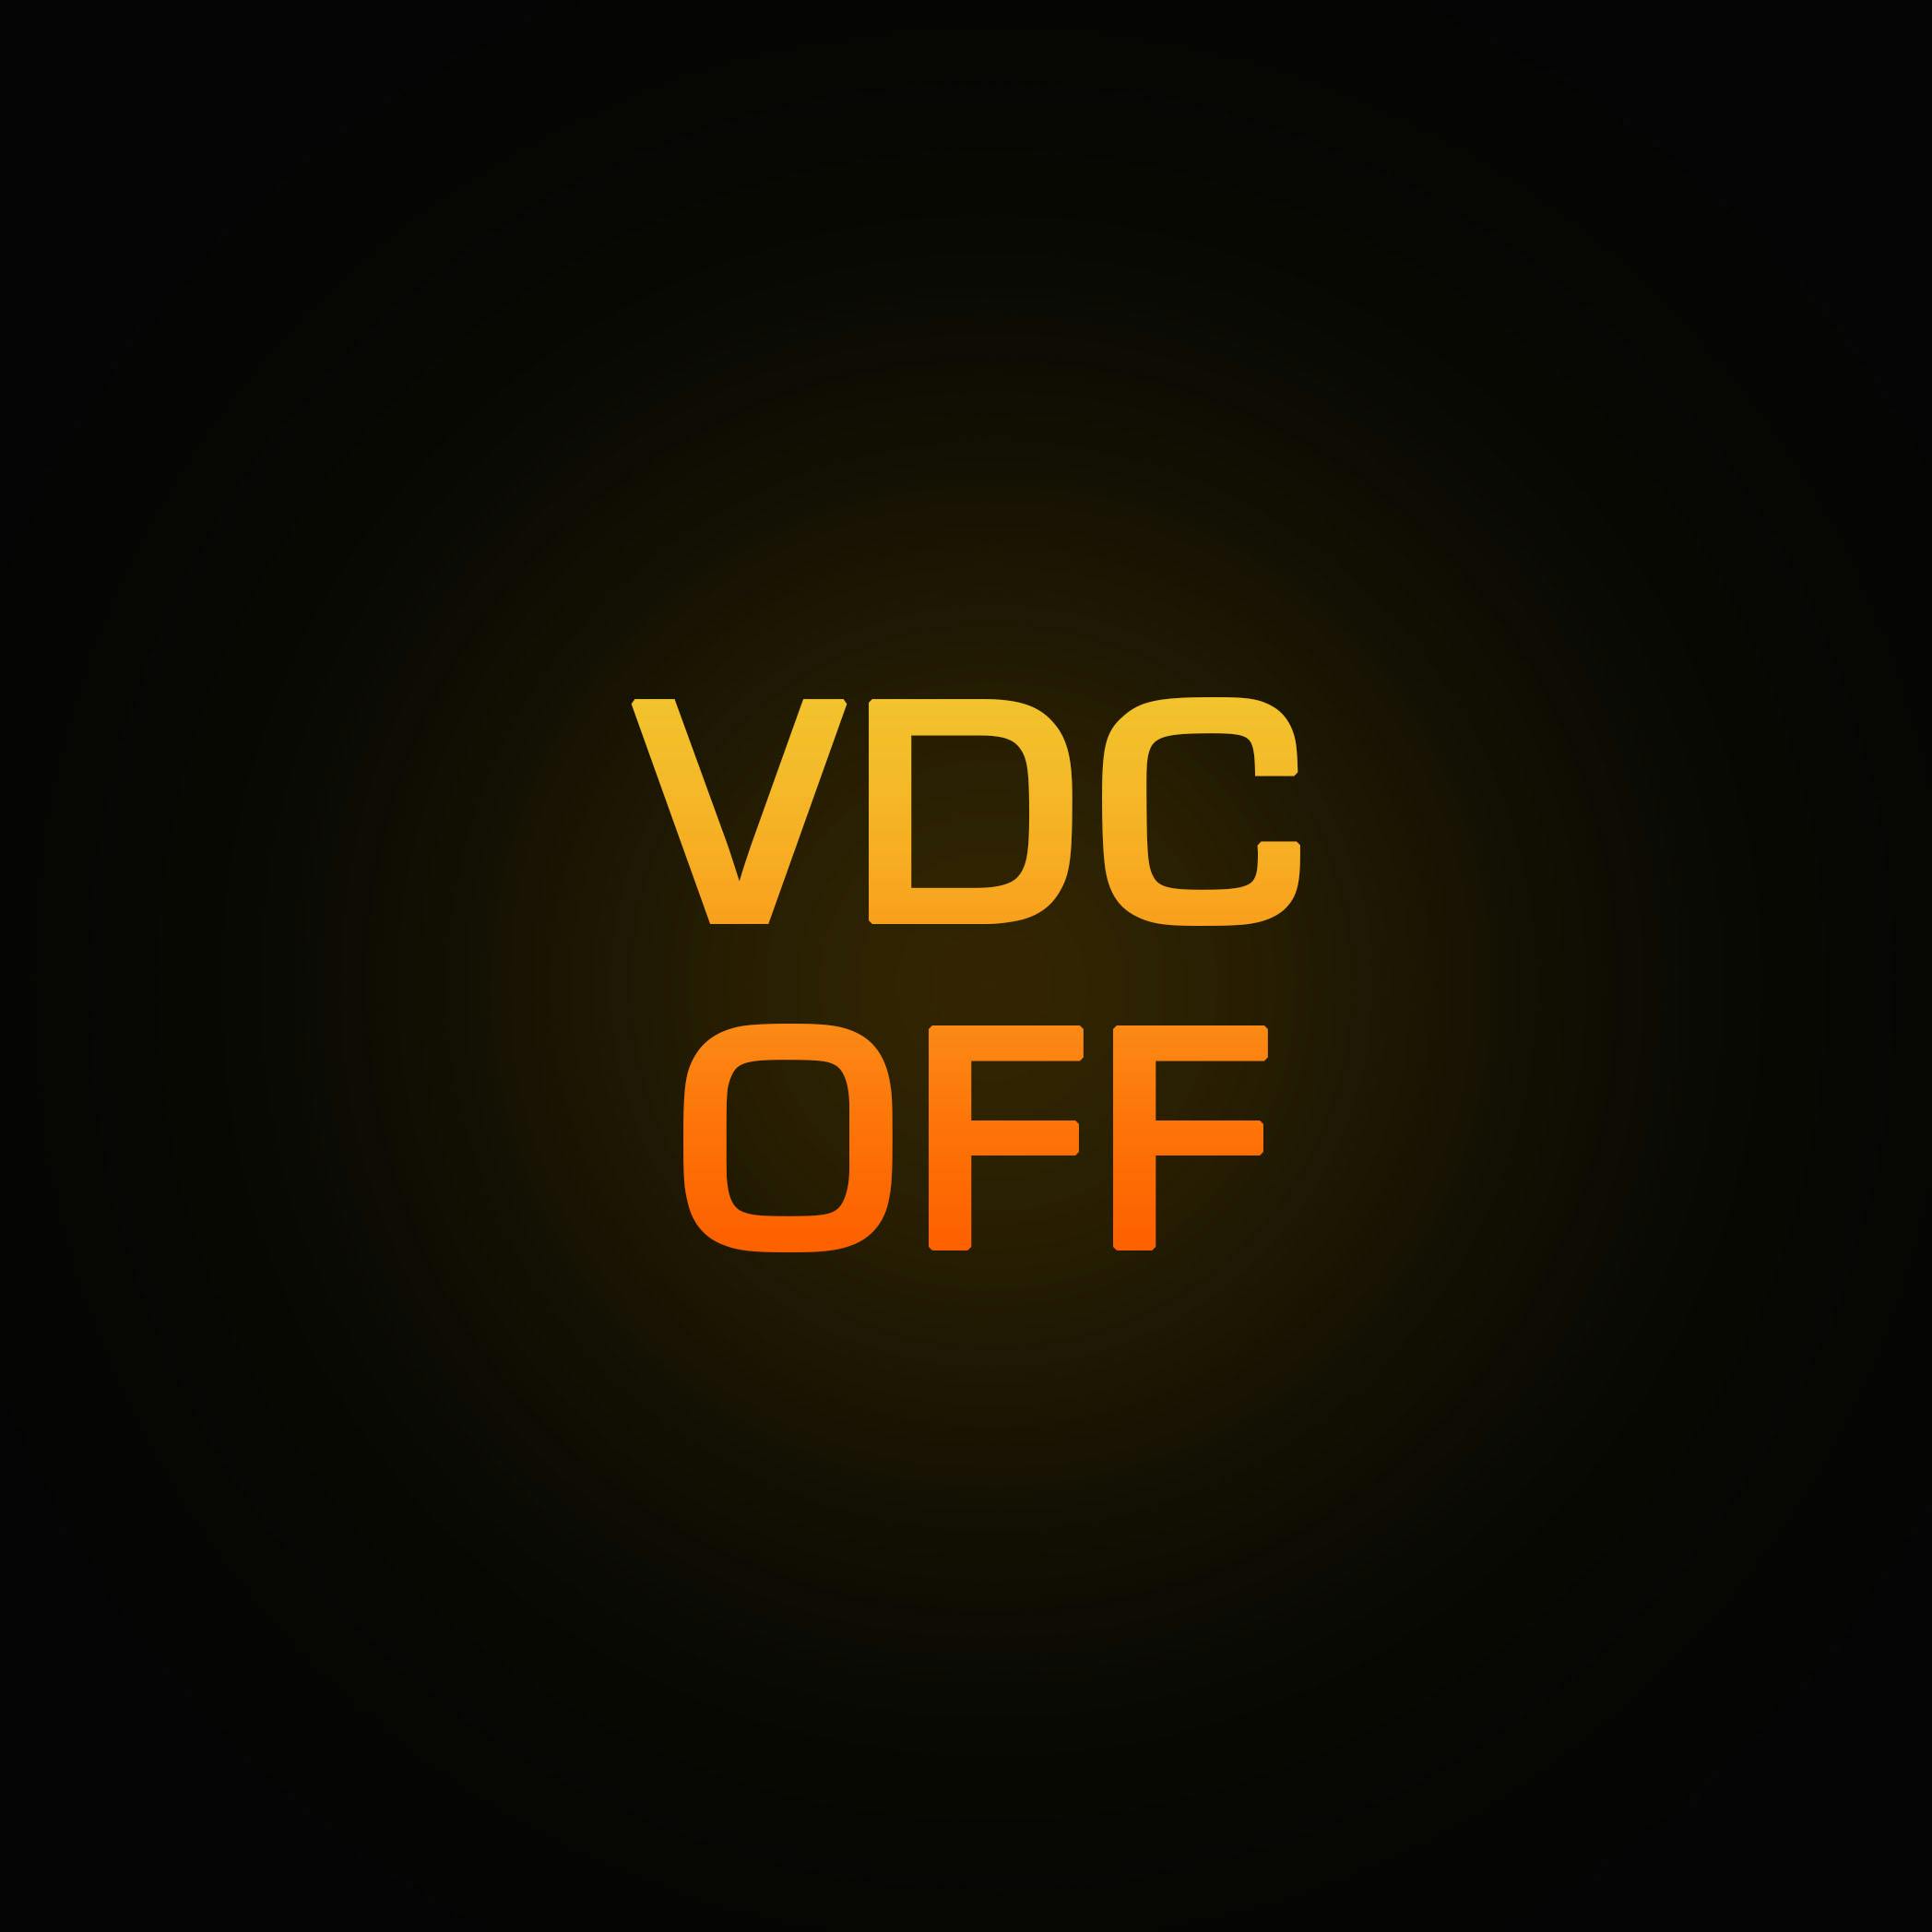 VDC OFF warning light